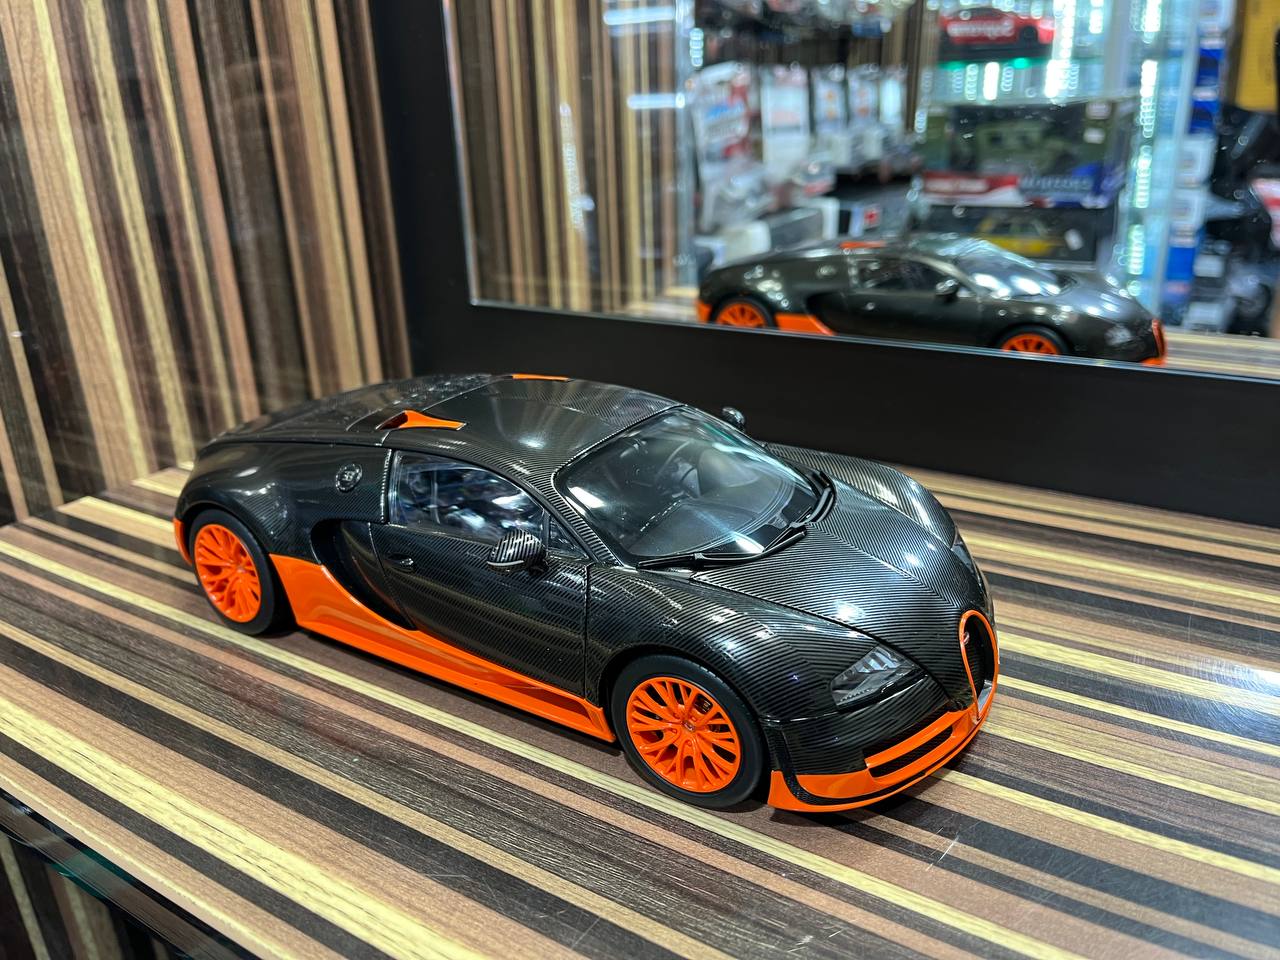 AutoArt Bugatti Veyron 16.4 Super Sport - 1/18 Diecast Model,Black Carbon/Orange- sold in Dturman.com Dubai UAE.